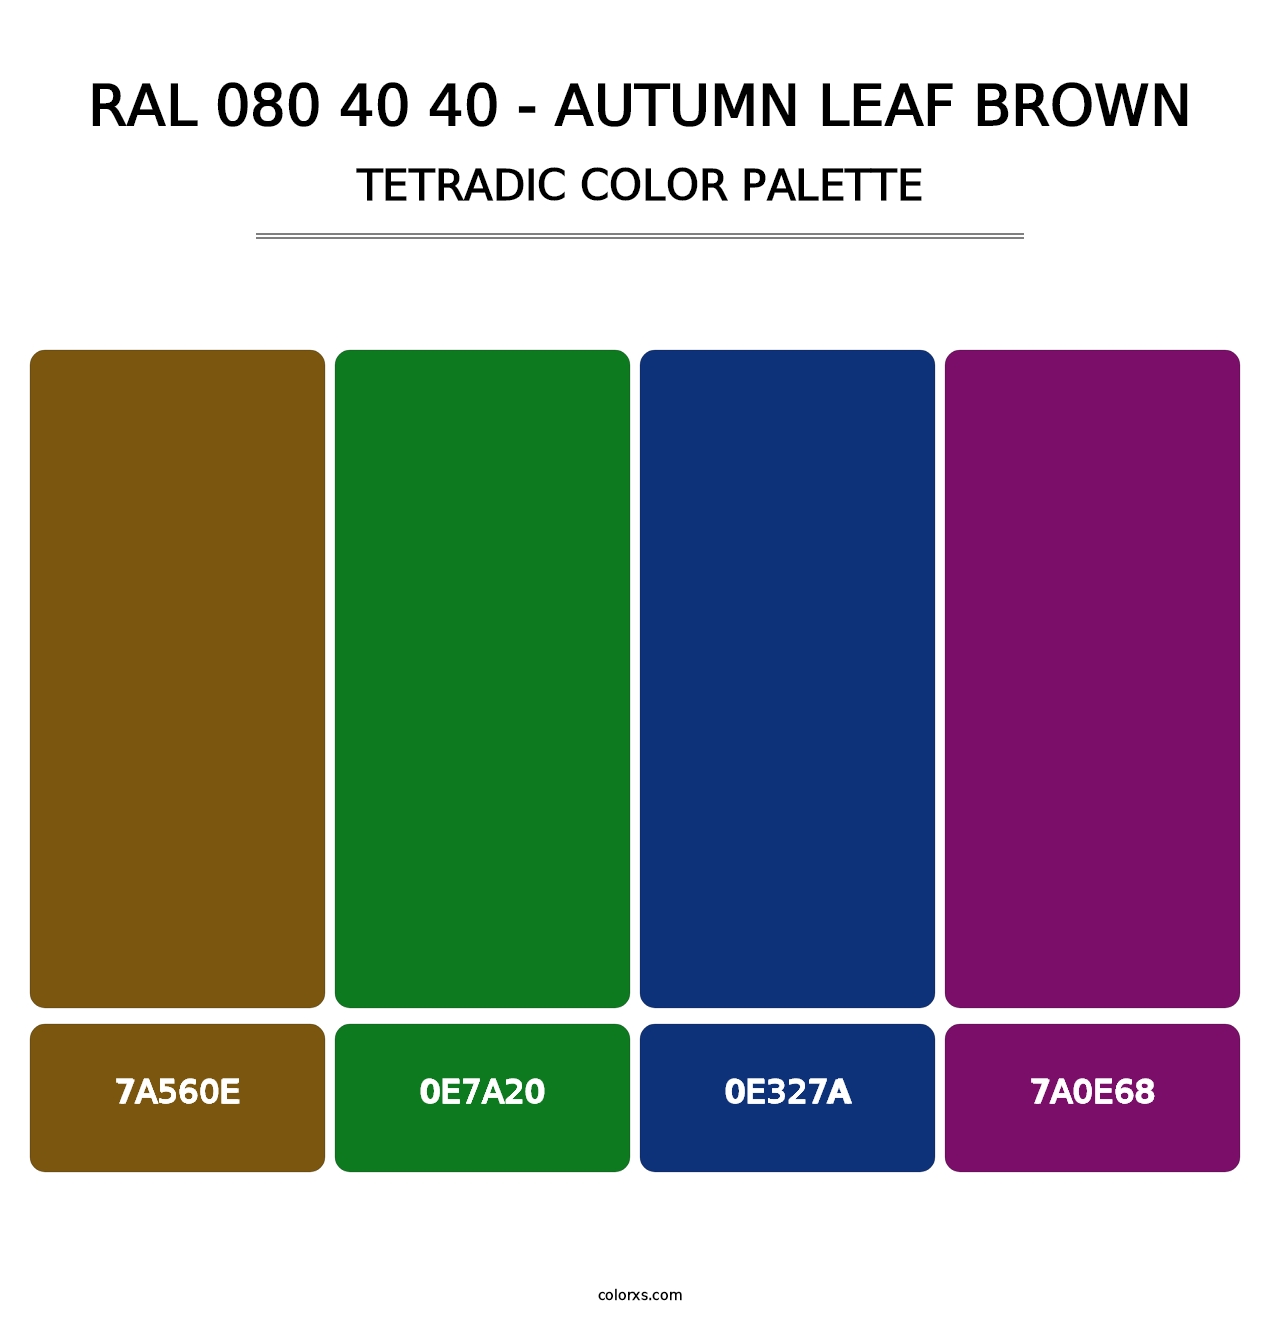 RAL 080 40 40 - Autumn Leaf Brown - Tetradic Color Palette